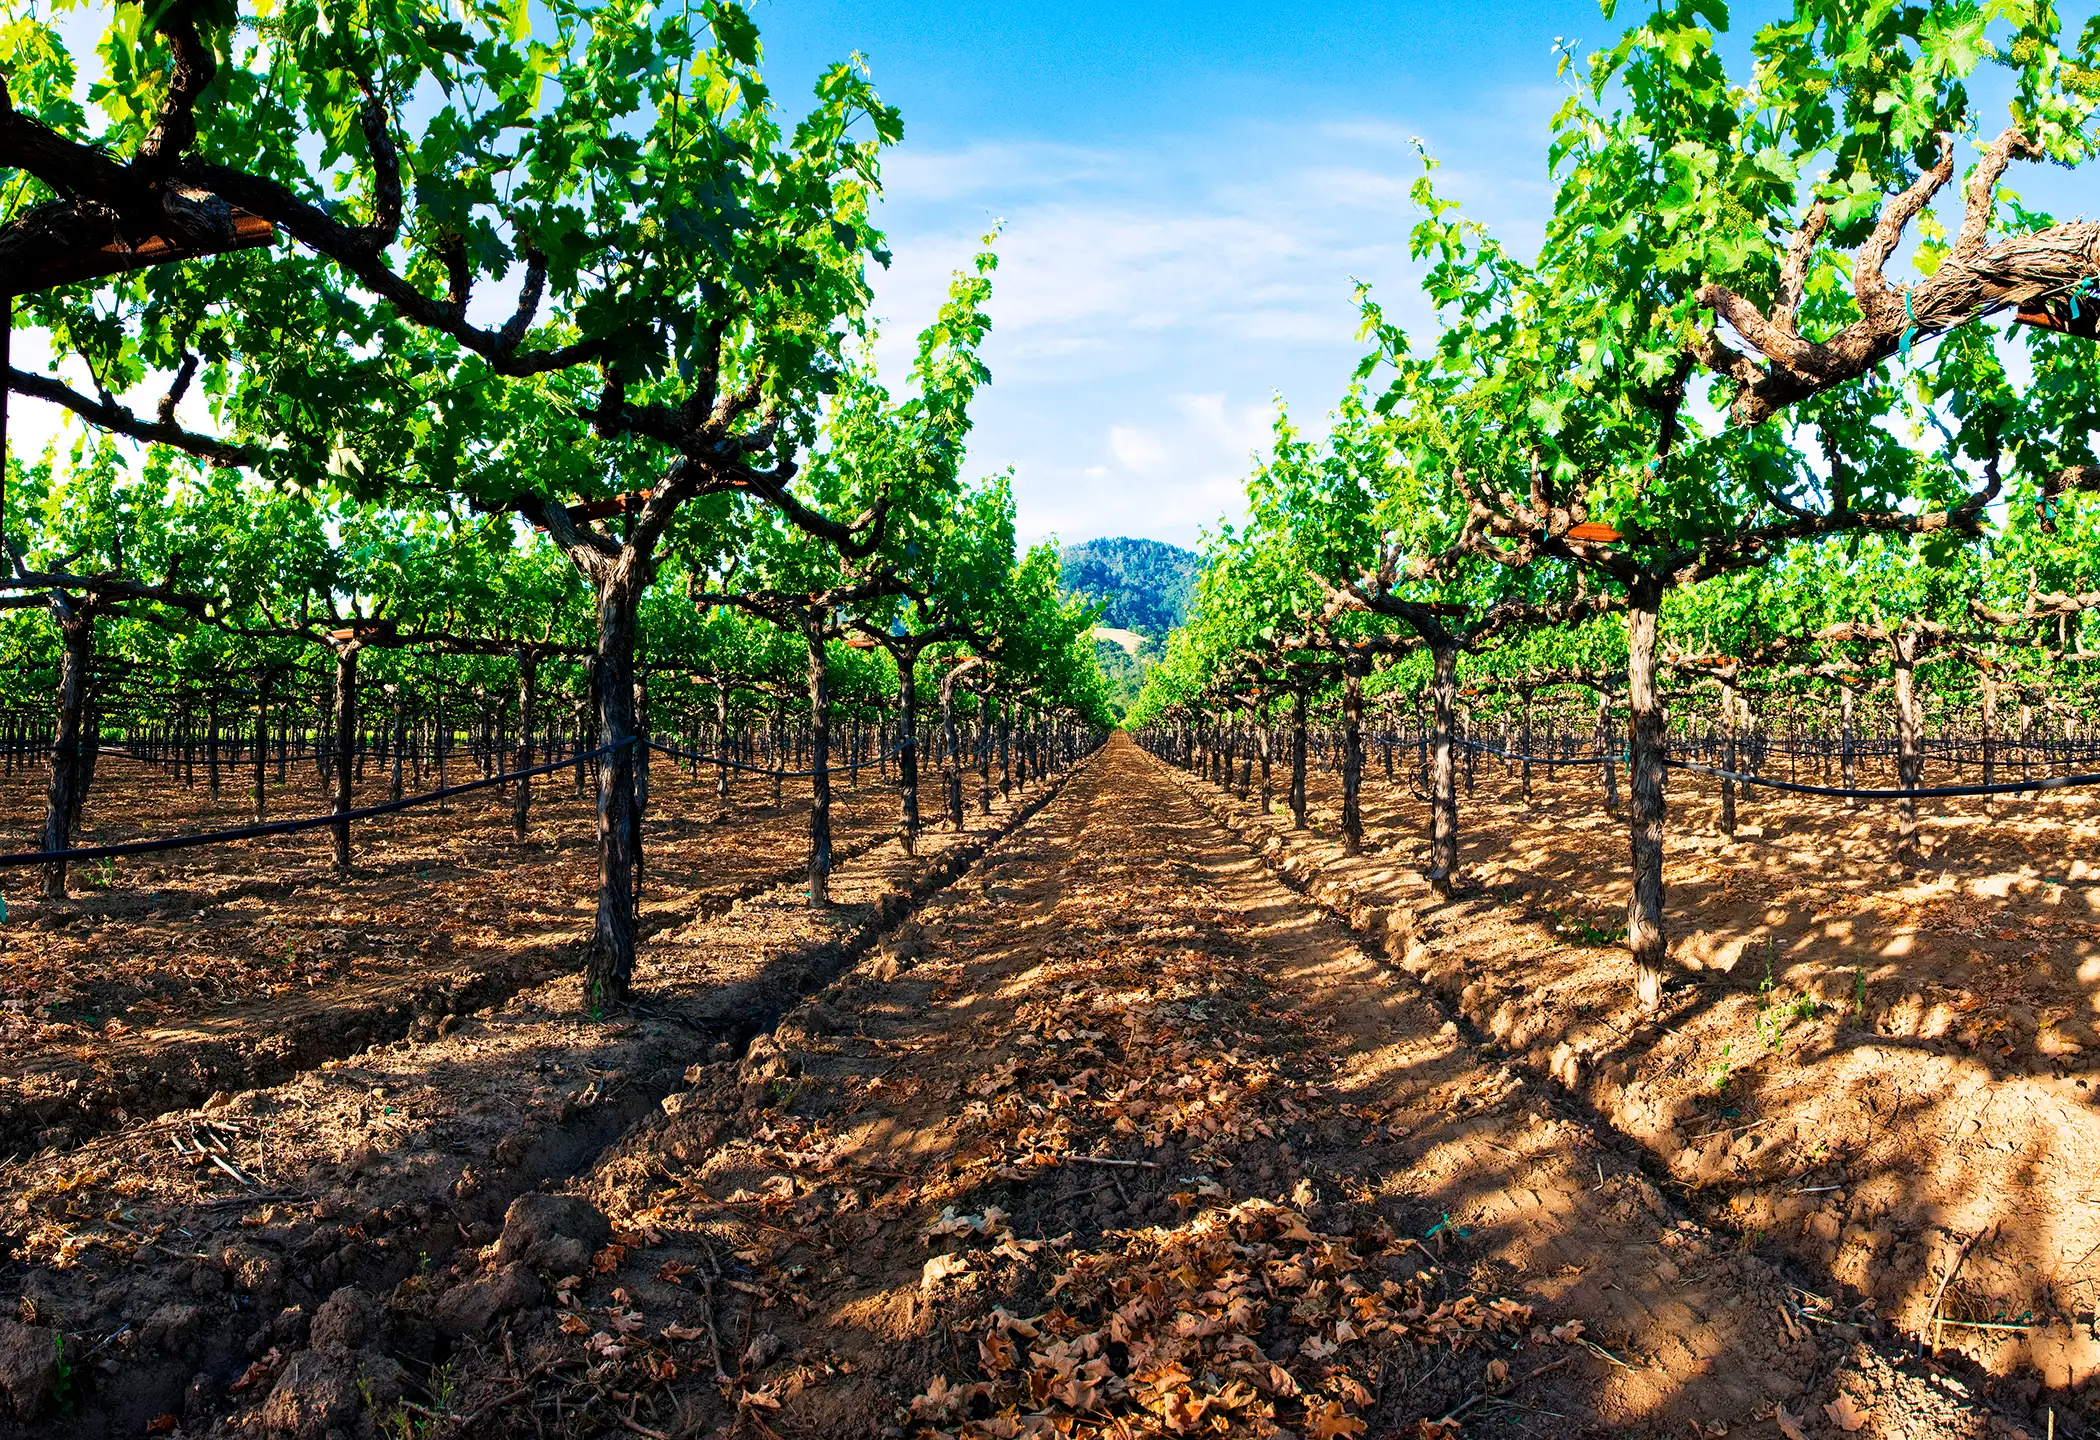 ground level image of vineyard rows